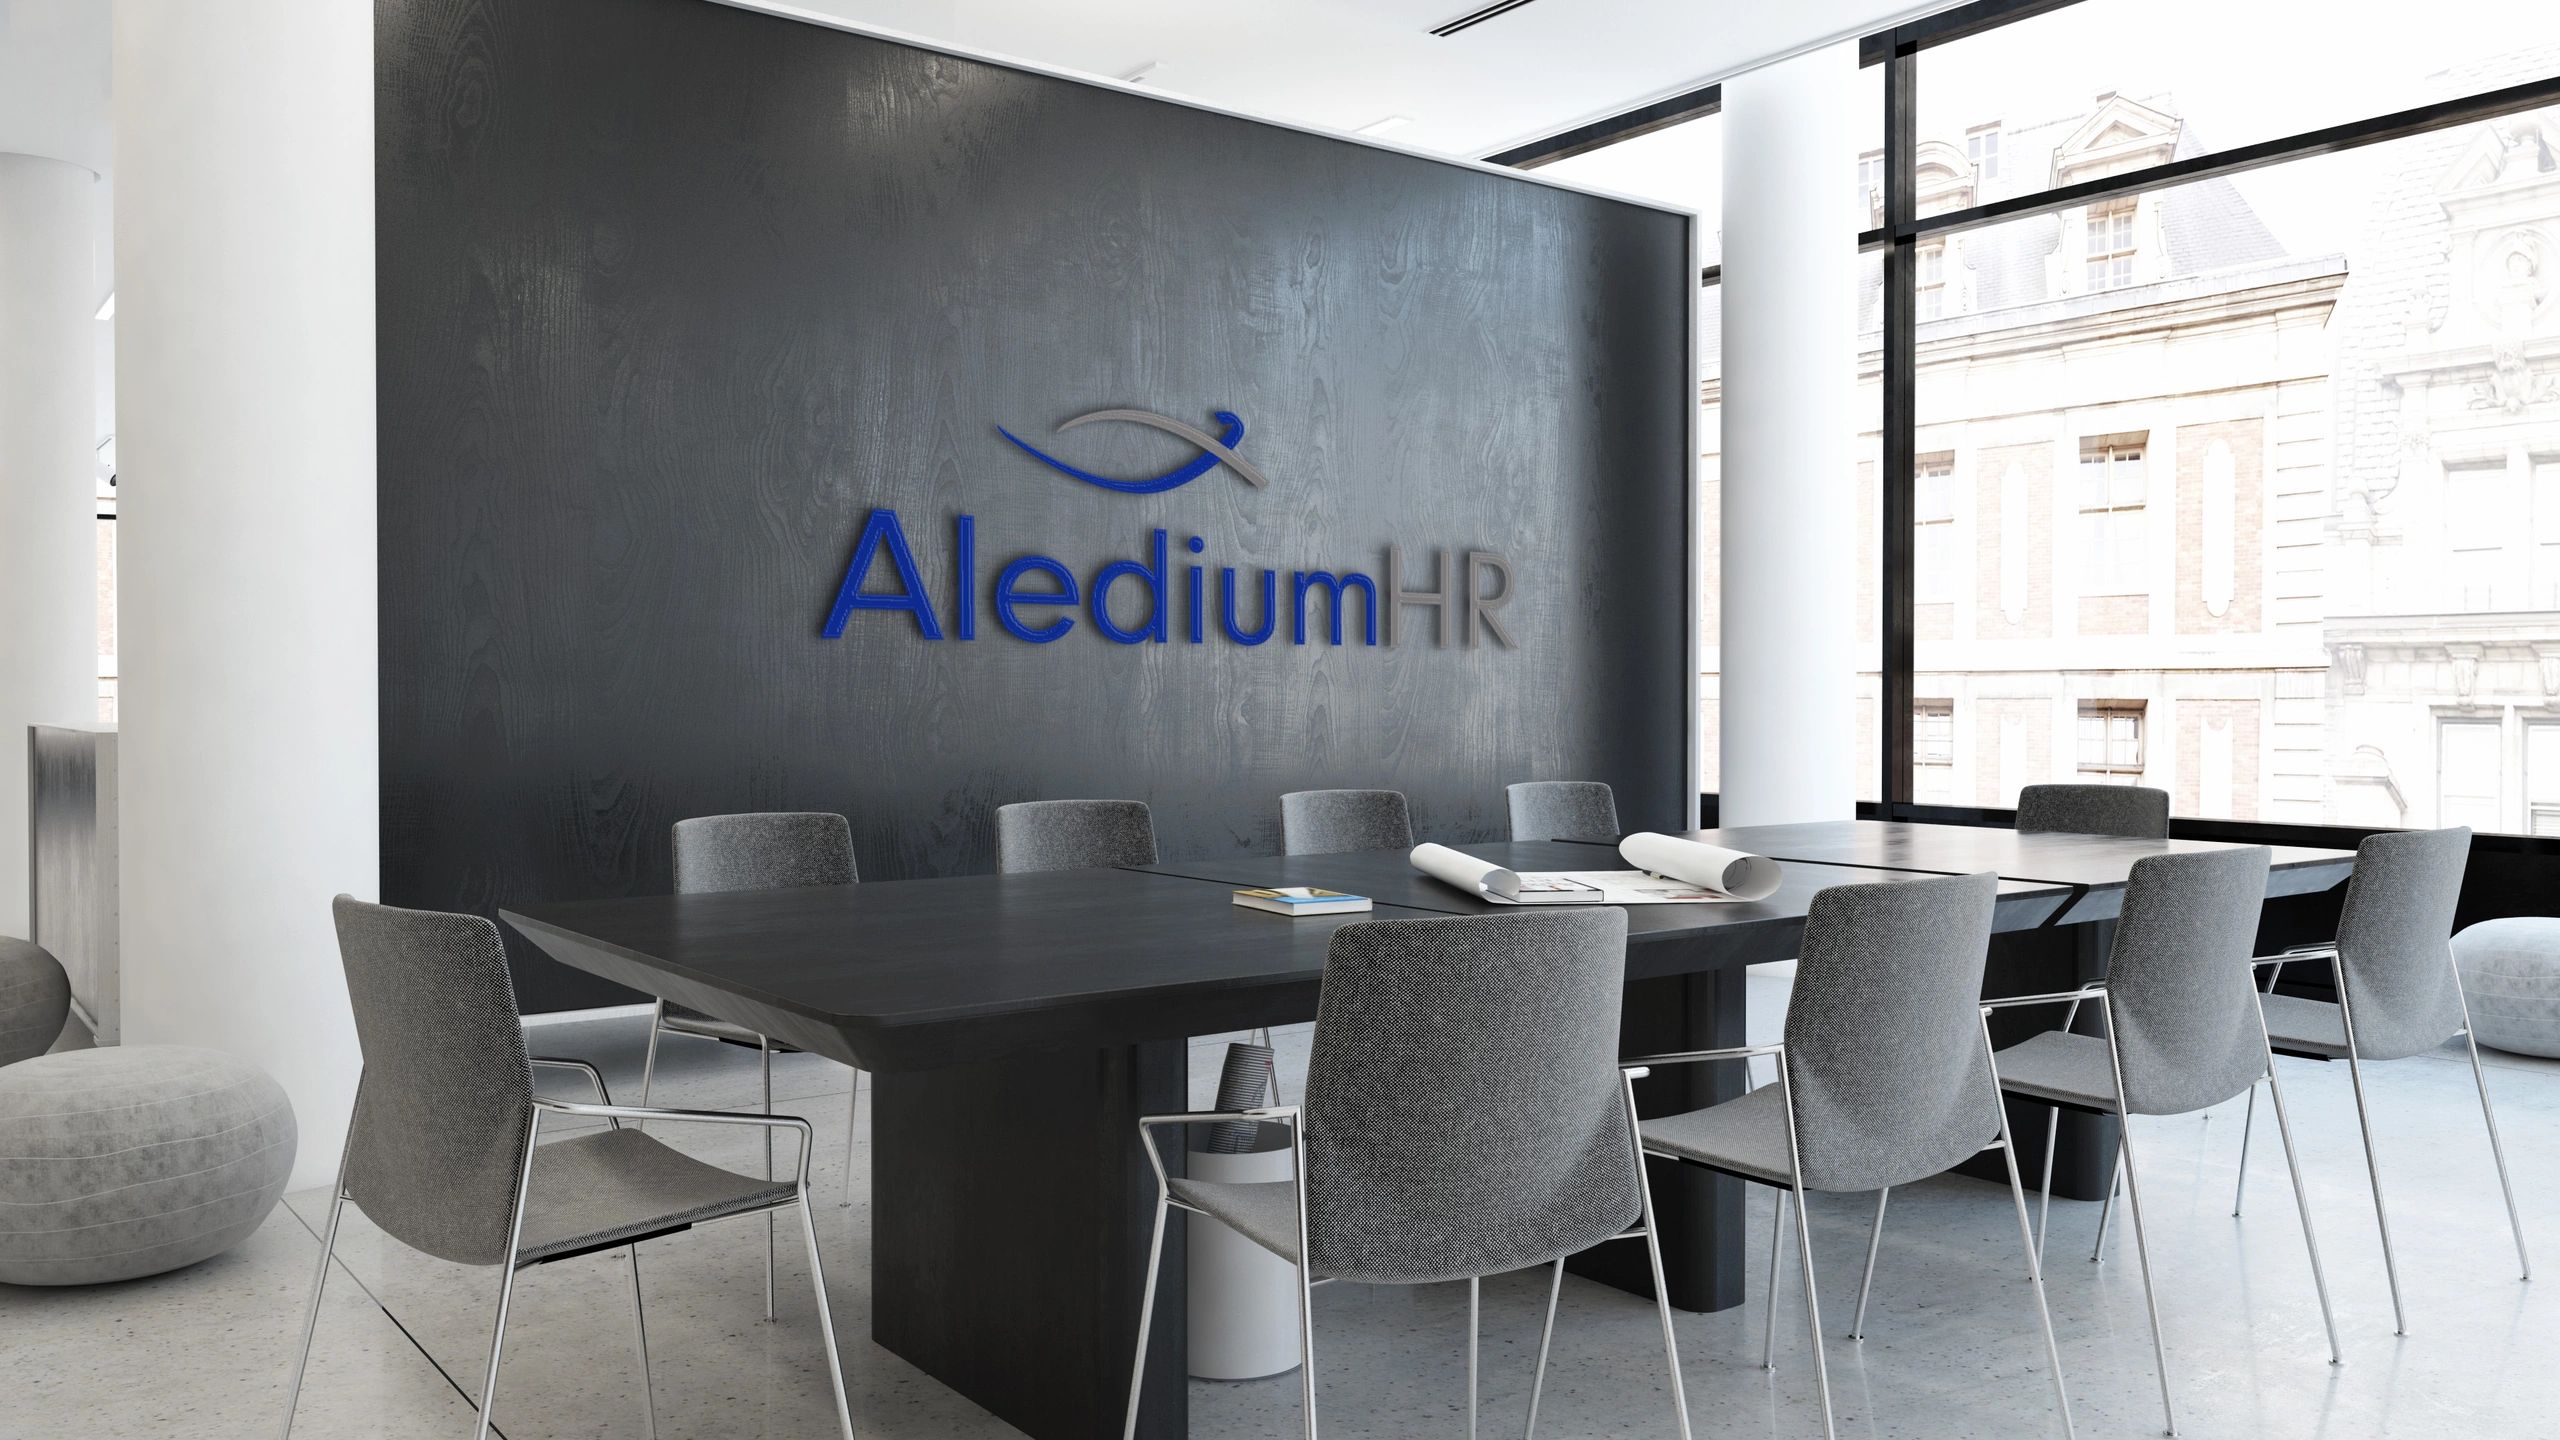 Aledium HR Conference Room